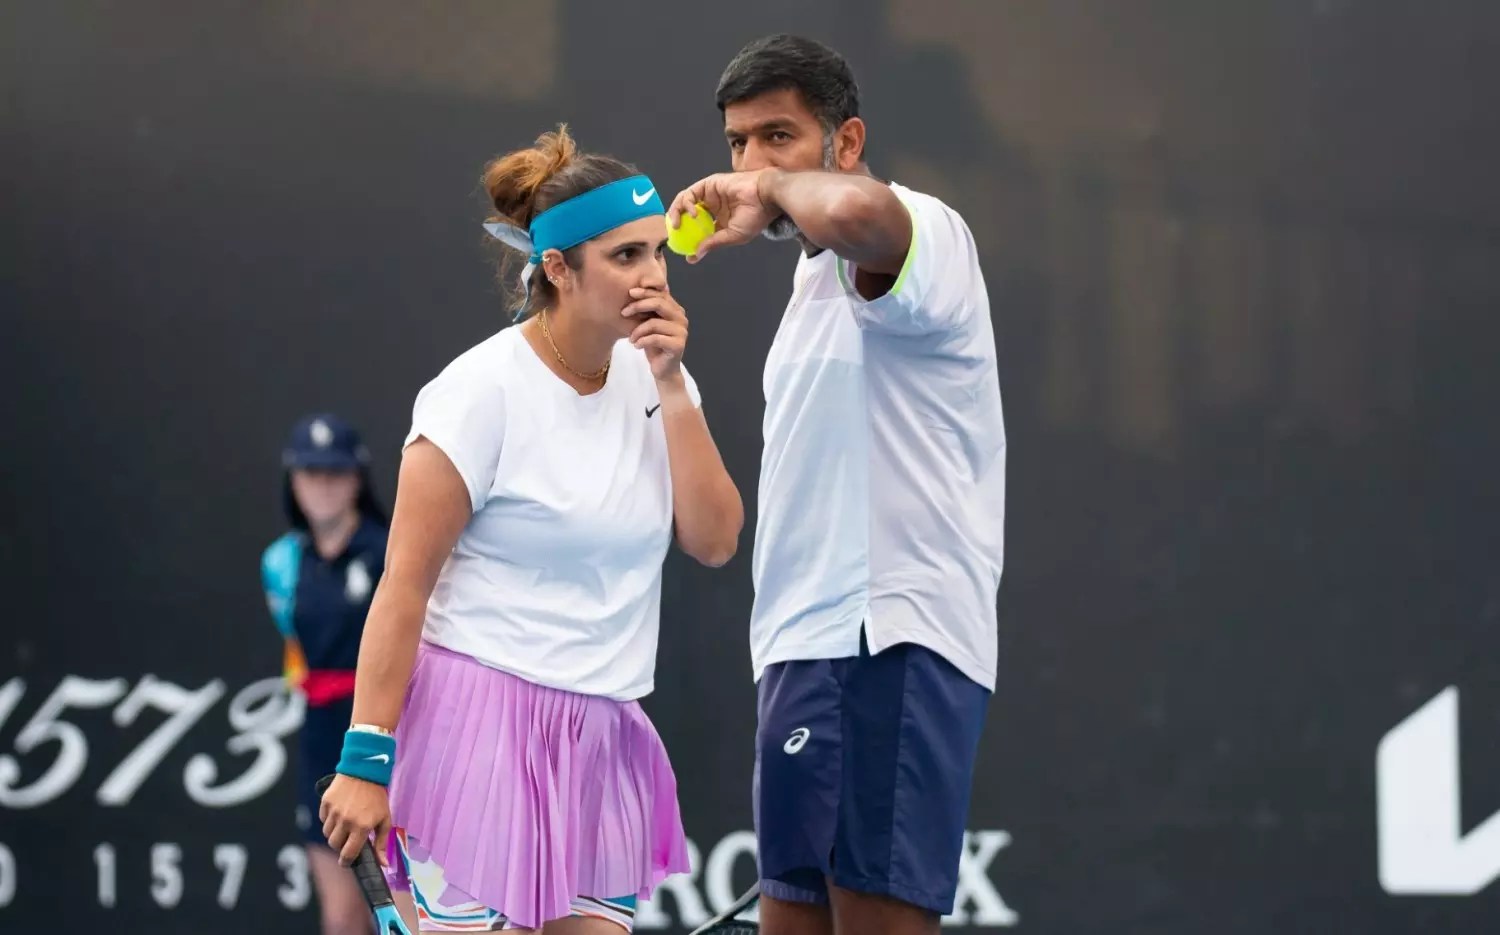 Sania Mirza Bopanna Highlights: Sania Mirza and Rohan Bopanna ENTER Mixed Doubles final, defeat Krawczyk-Skupski pair in semifinals at Australian Open 2023 - Follow Australian Open LIVE updates 